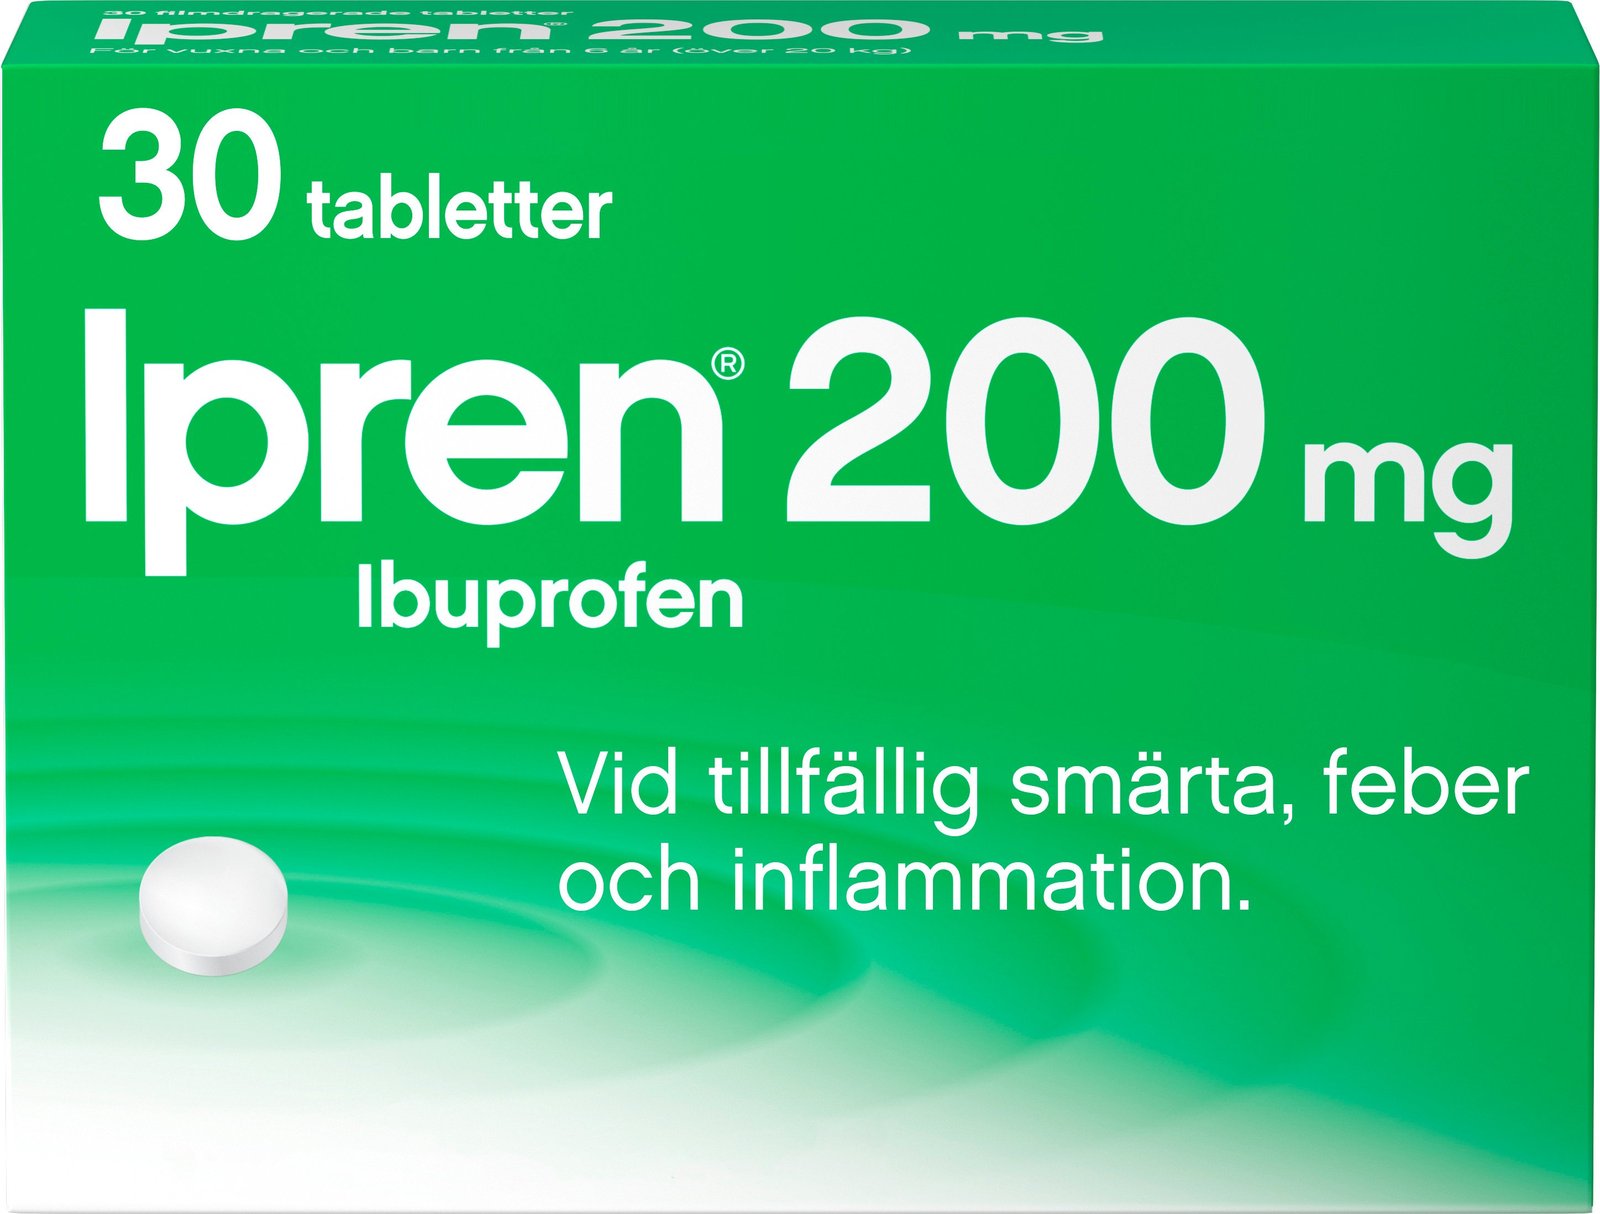 Ipren 200mg Ibuprofen 30 tabletter